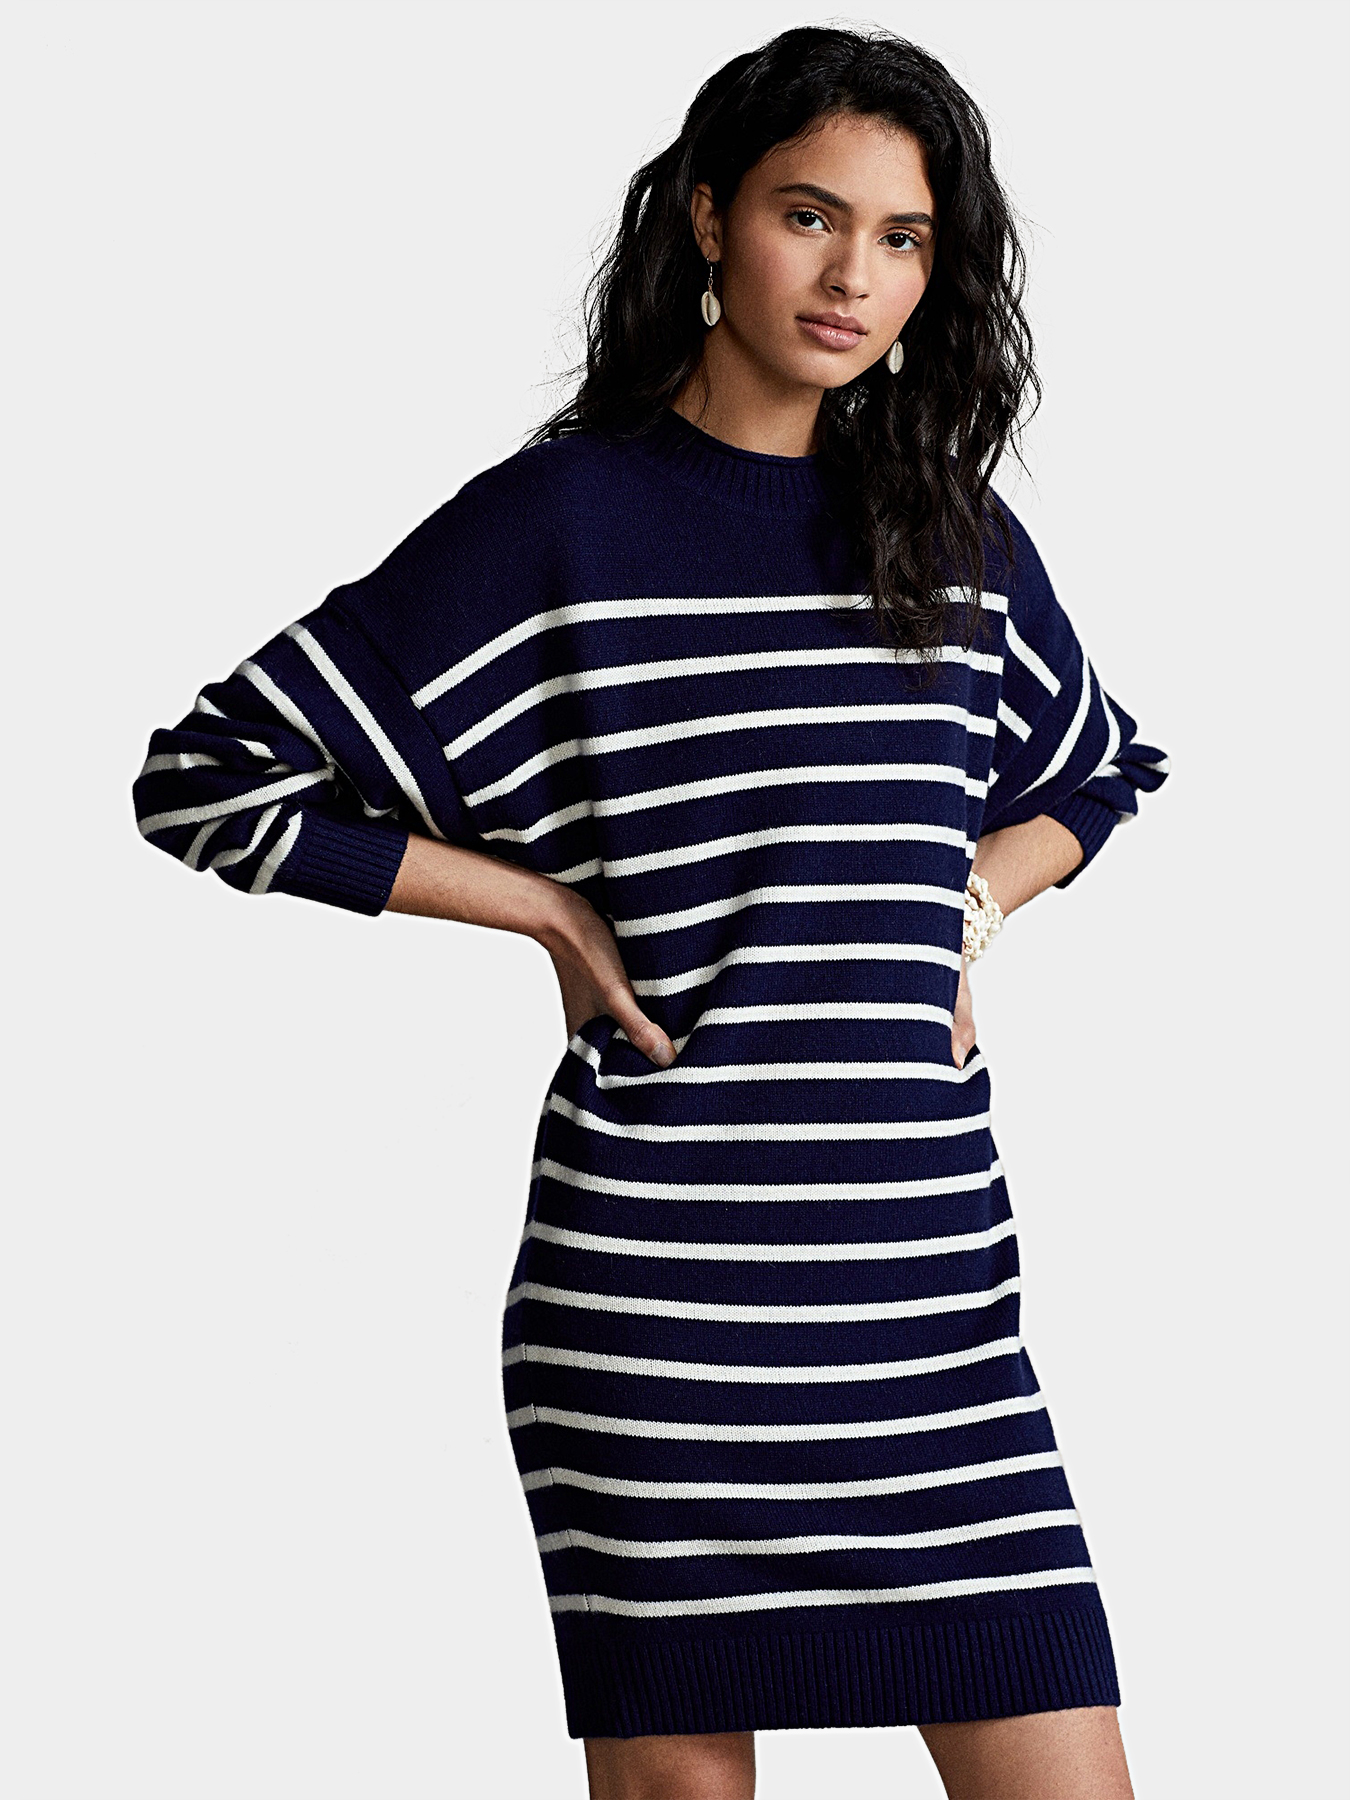 Striped cashmere dress brand POLO RALPH LAUREN — /en